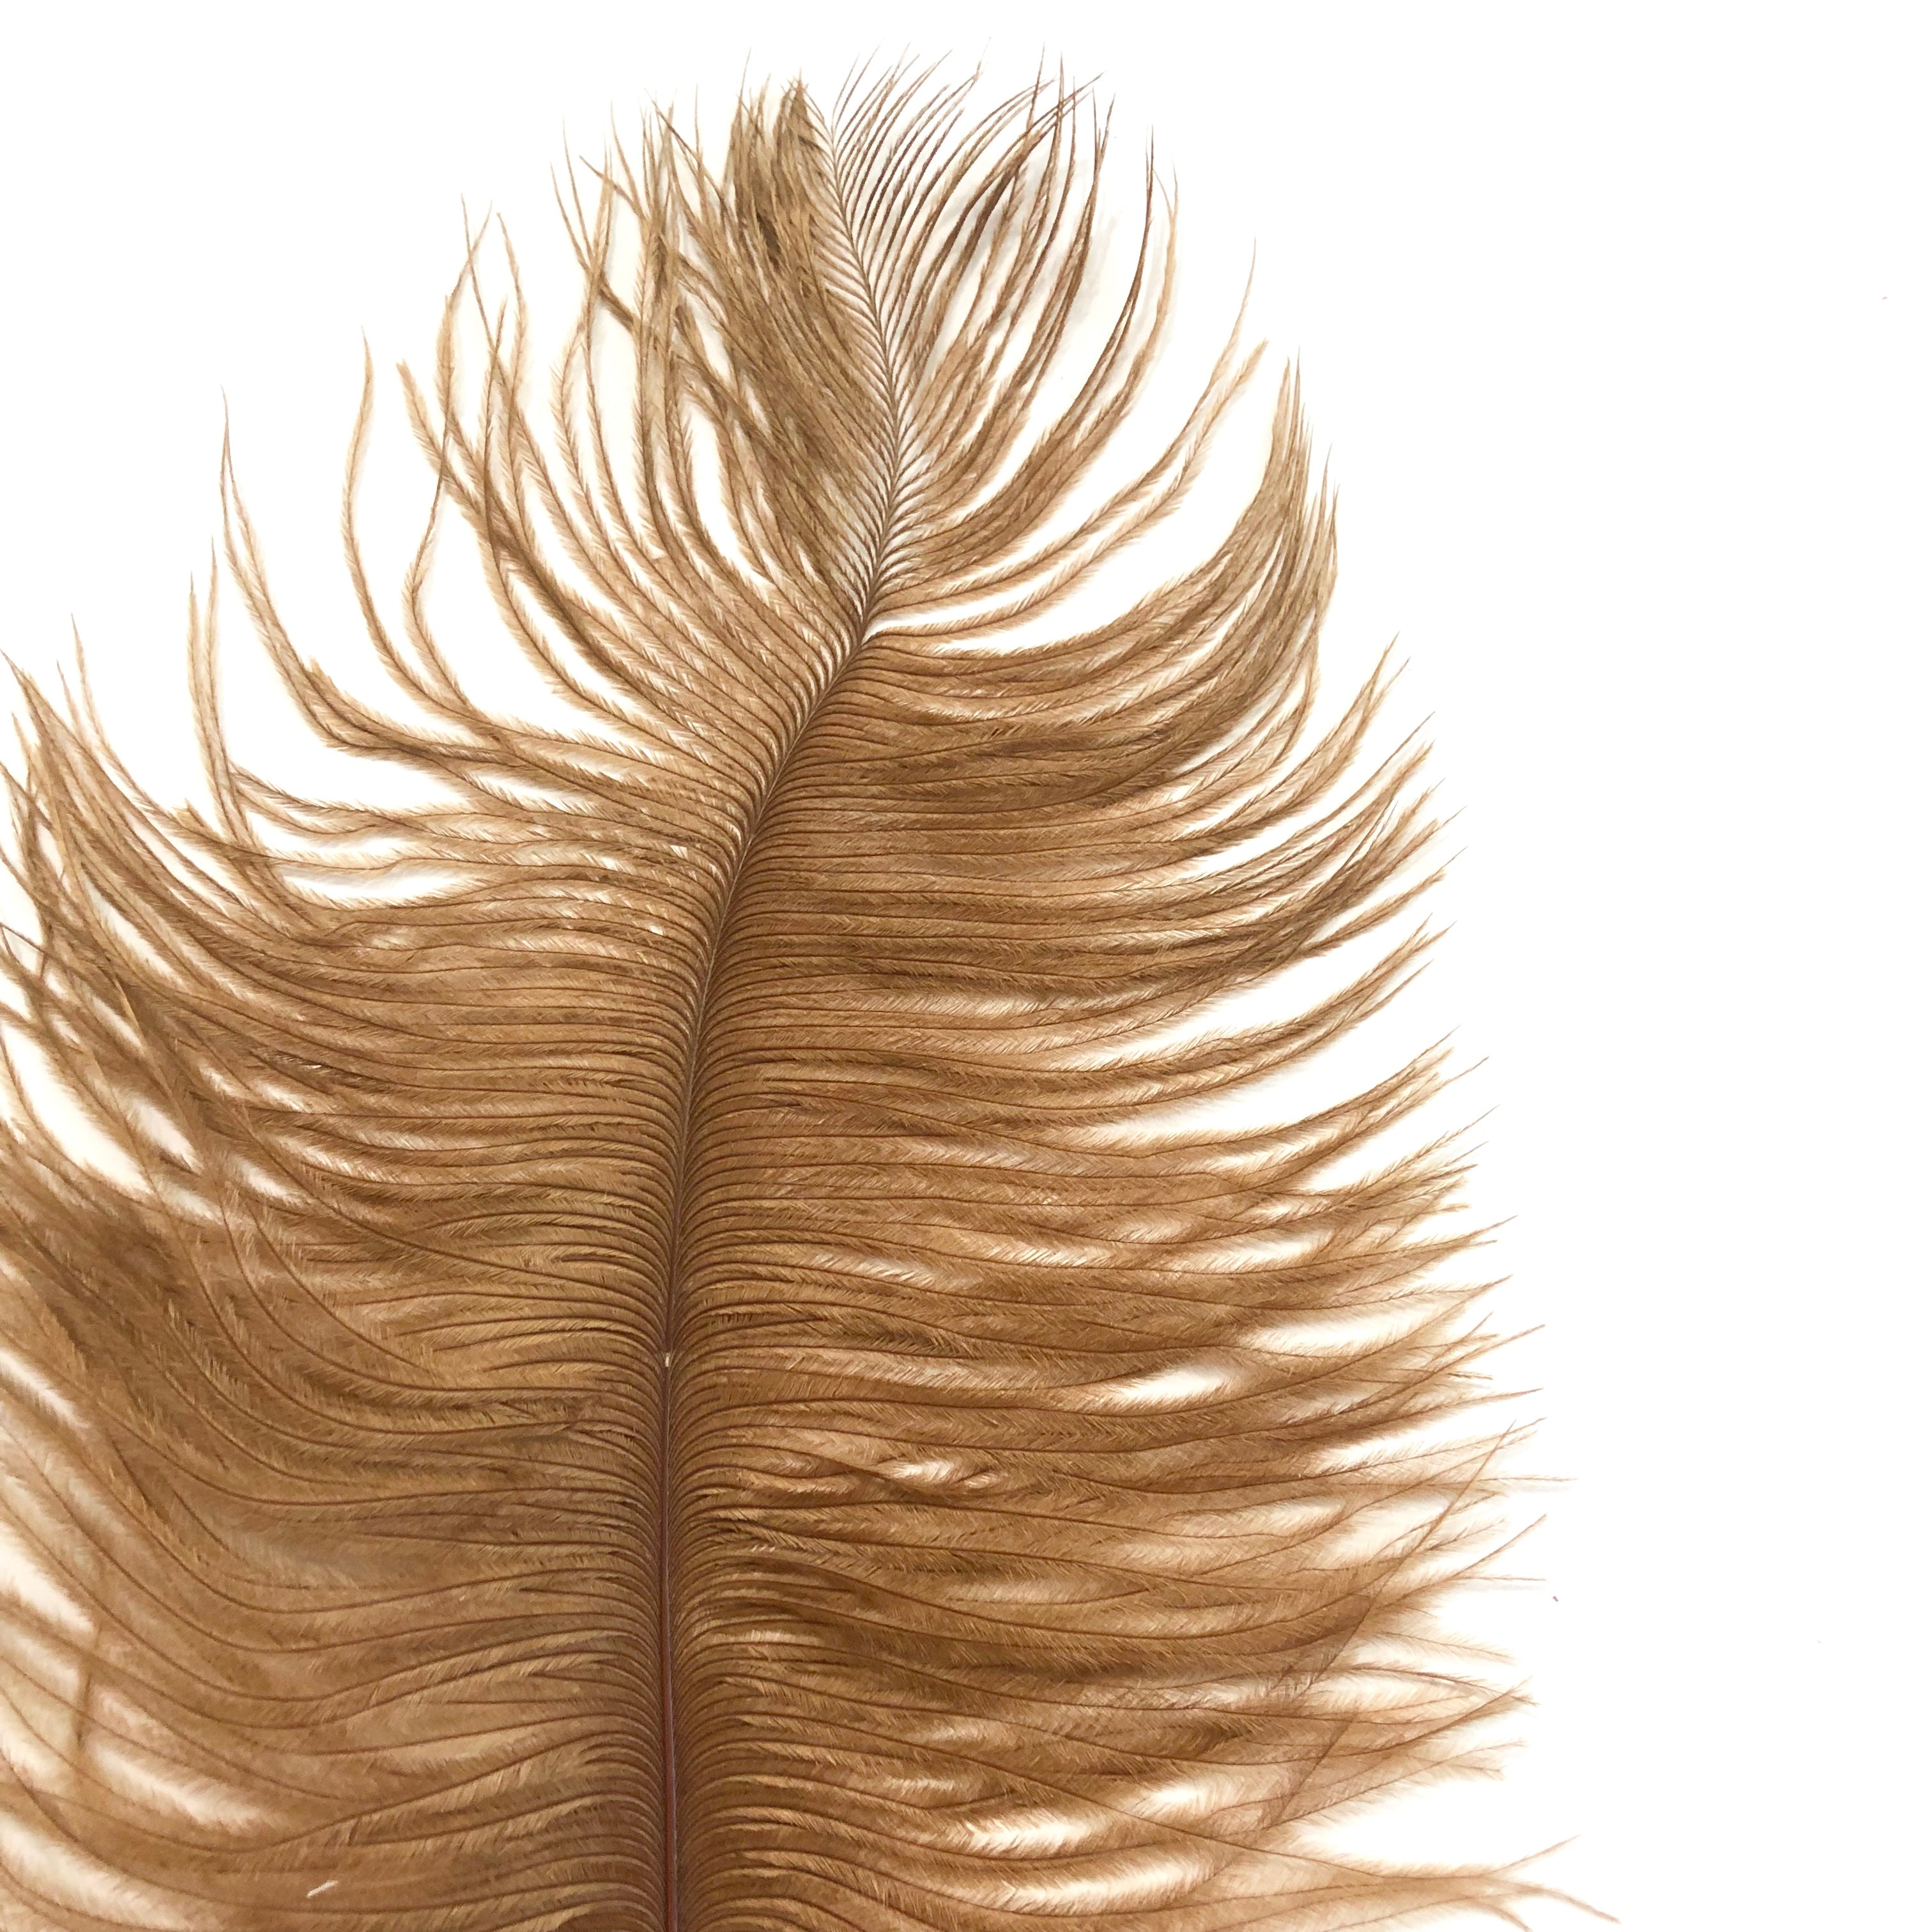 Ostrich Feather Drab 37-42cm x 5 pcs - Rust Brown ((SECONDS))